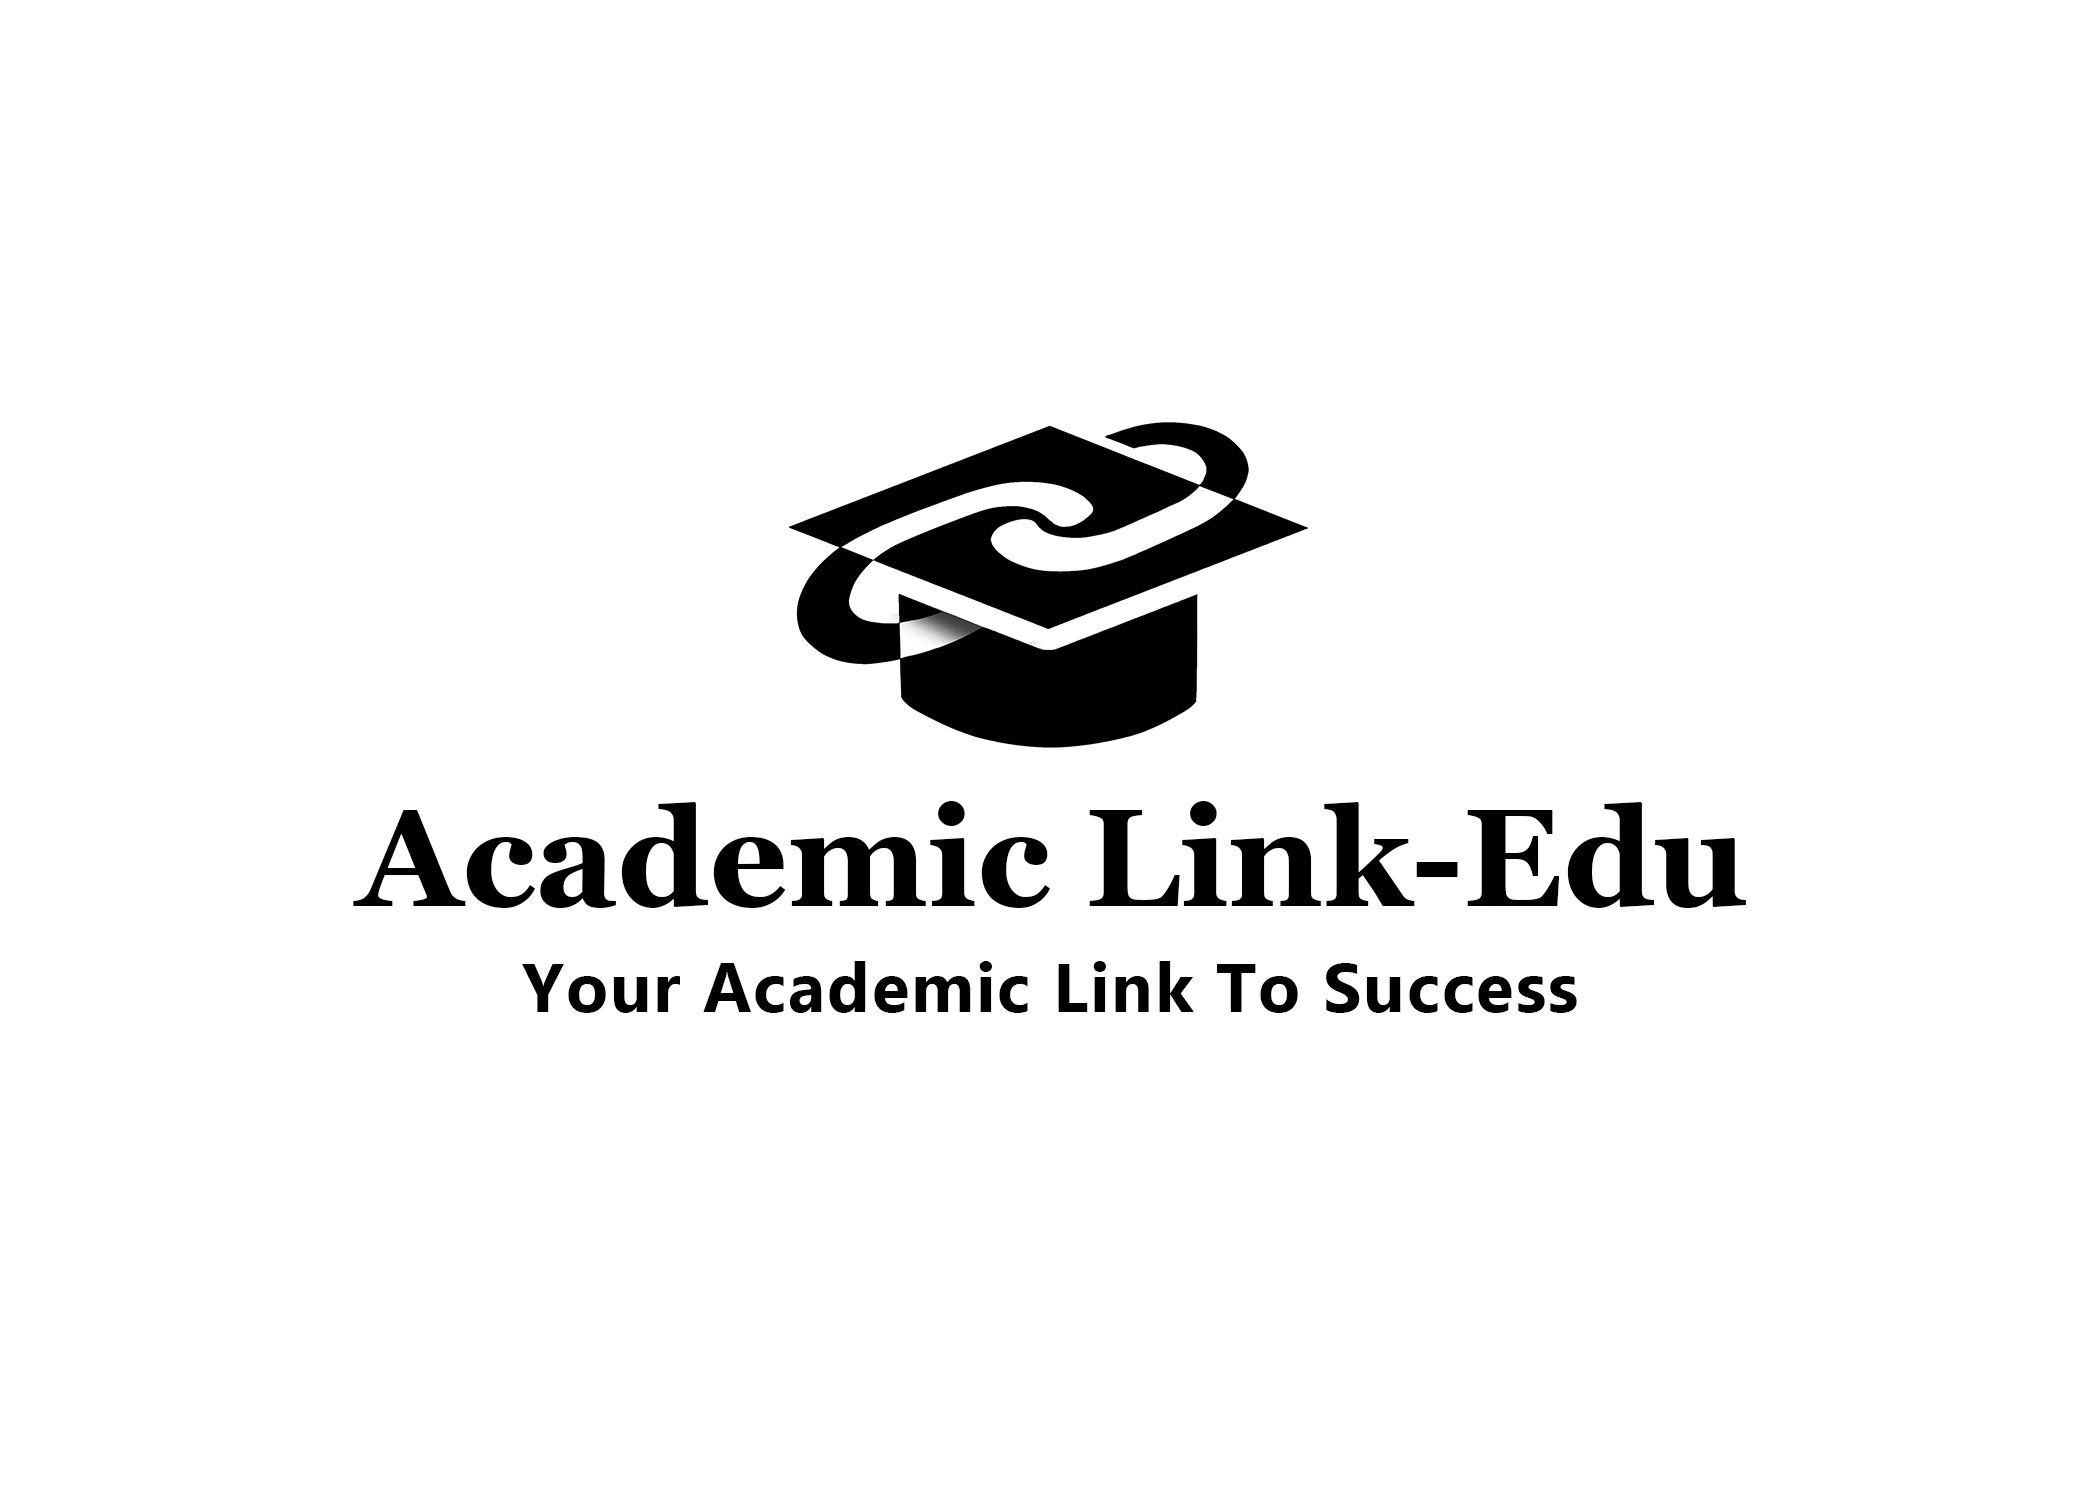 Academic Link-Edu